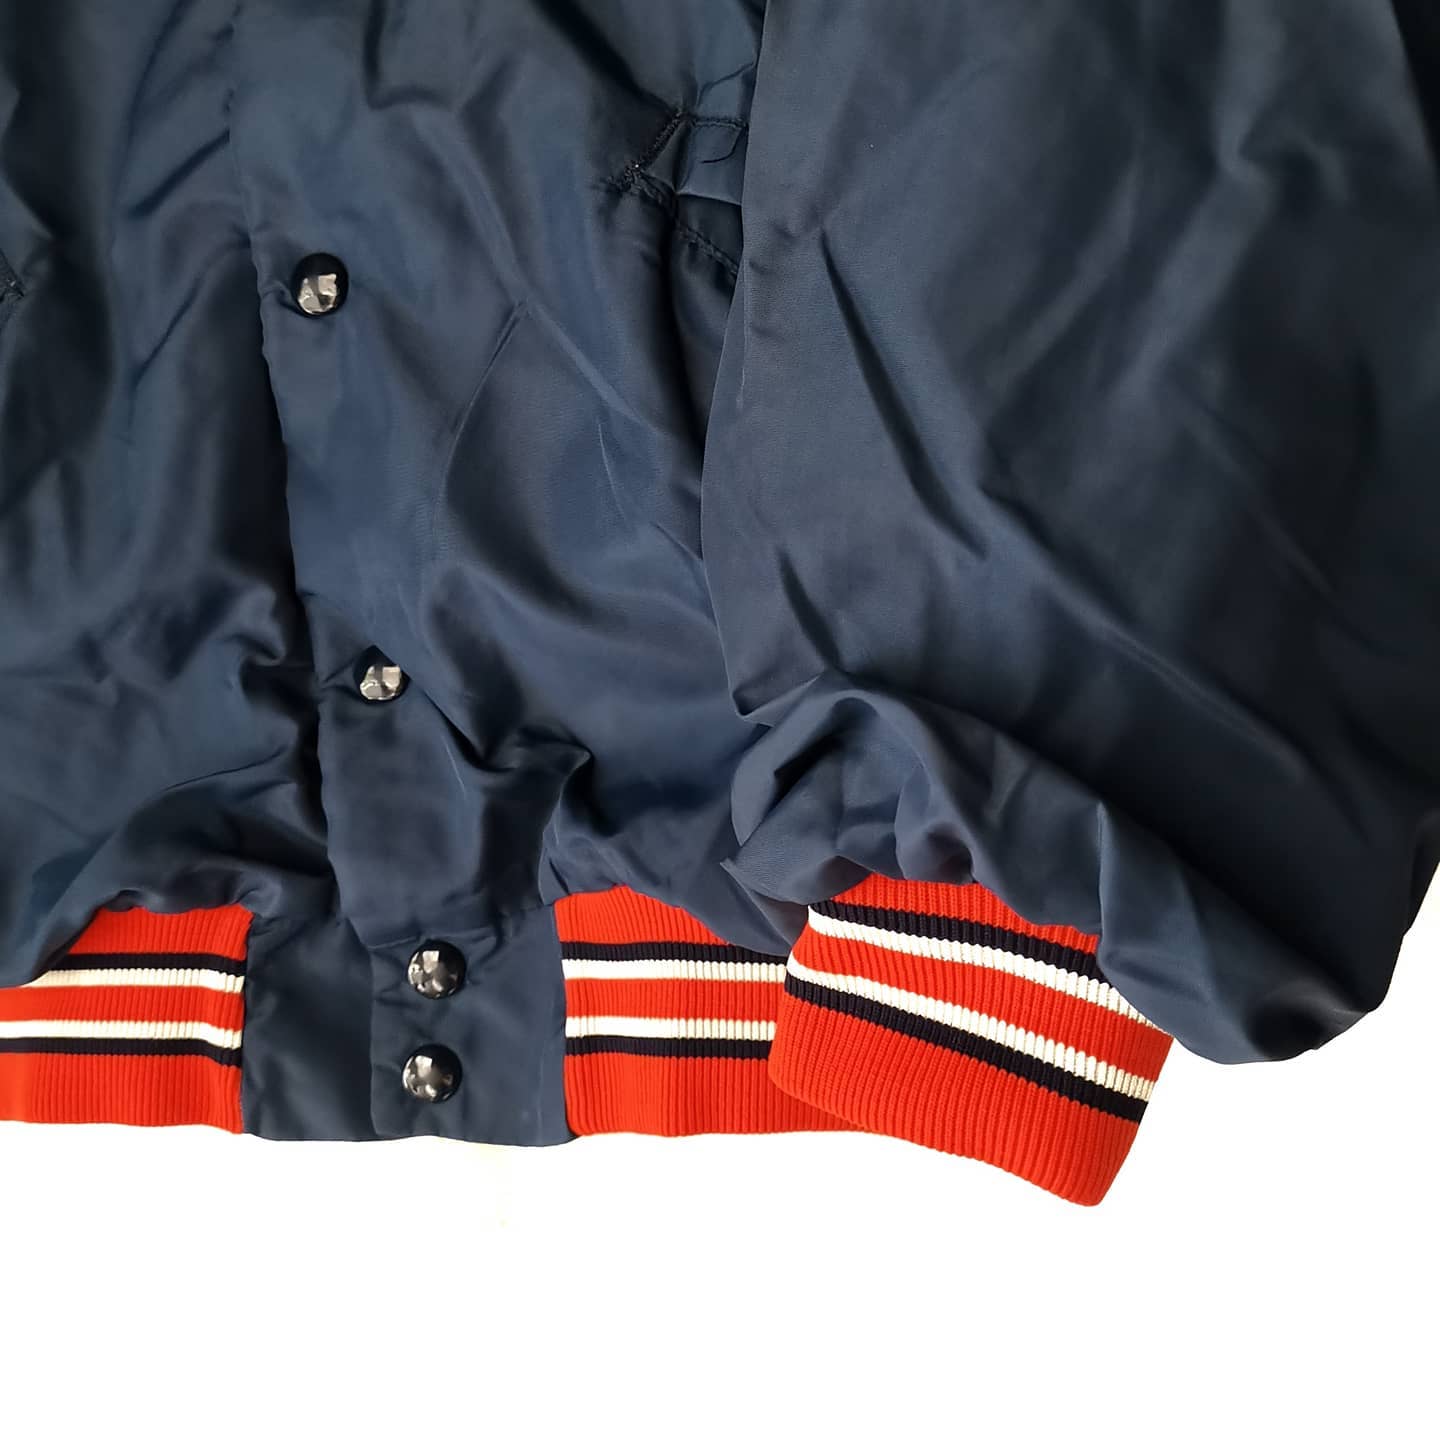 1970s Nylon Jacket